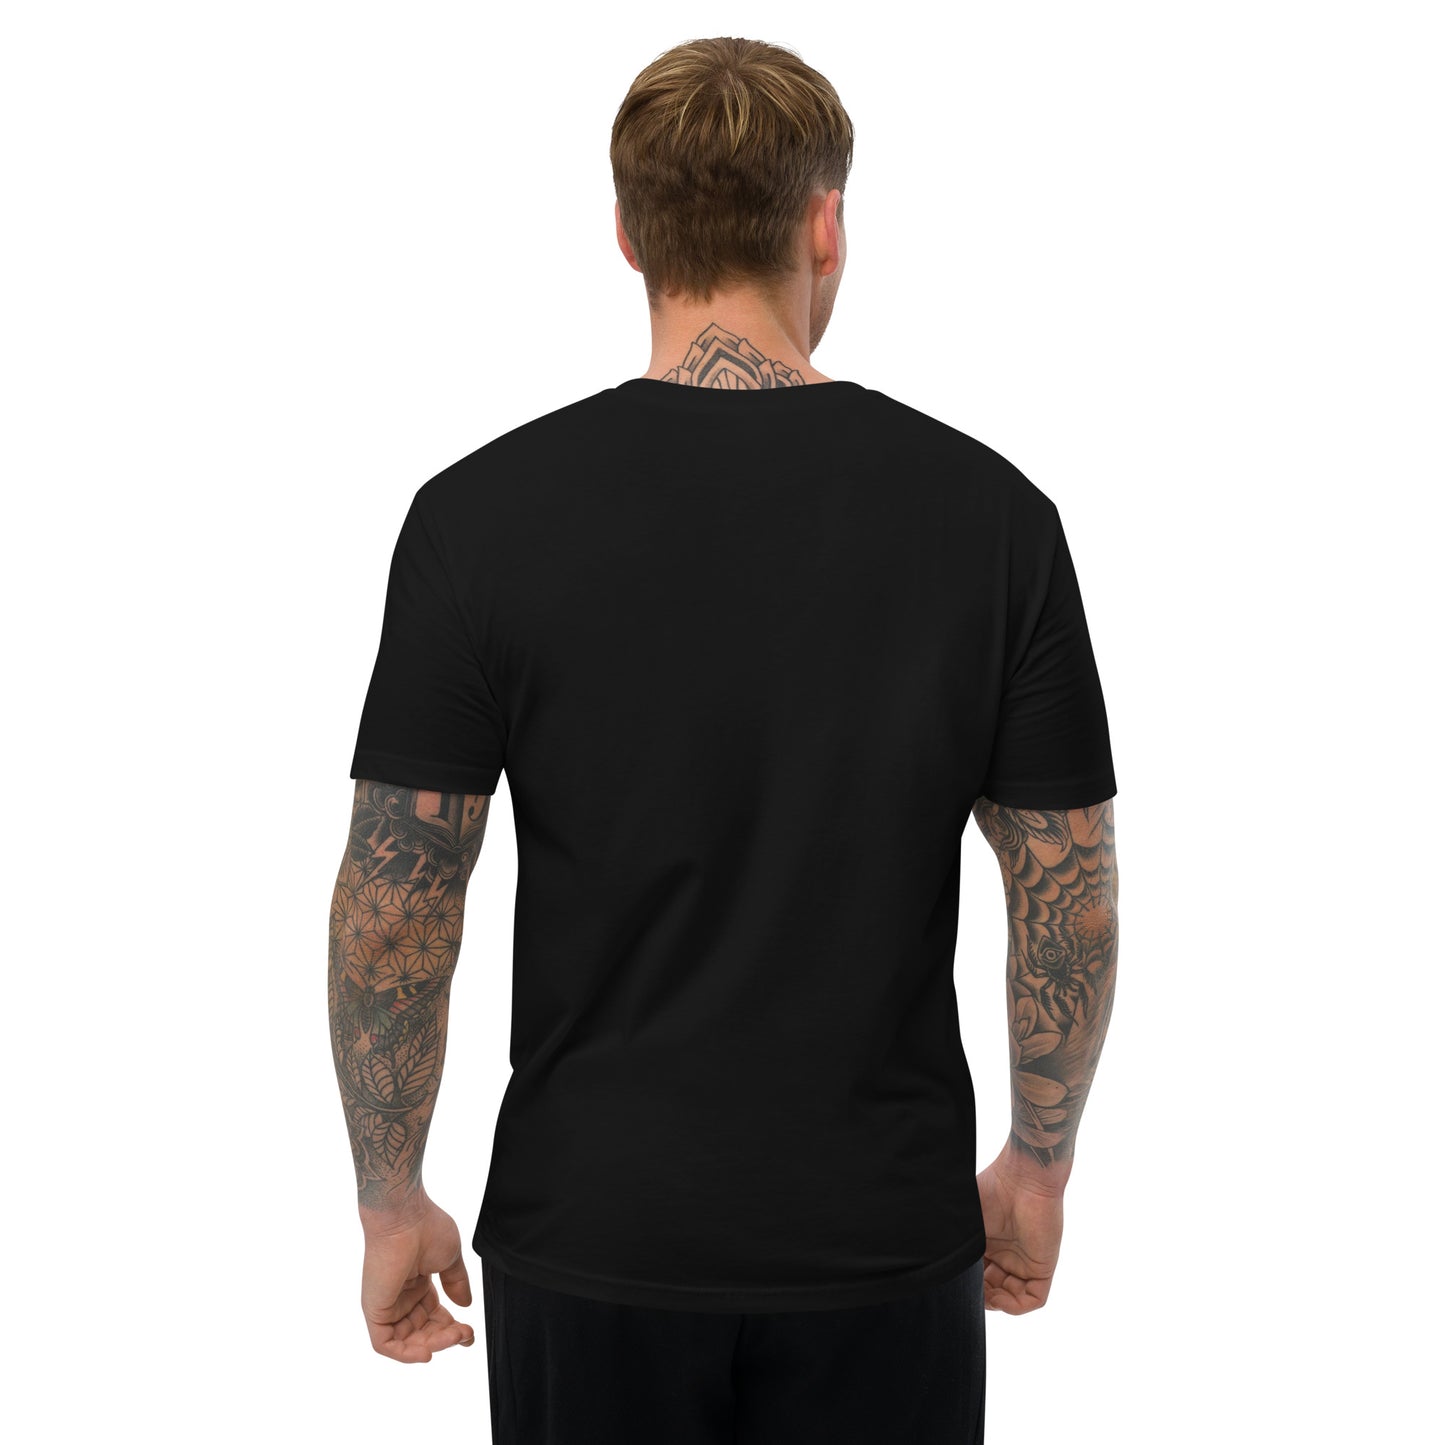 HEARD BLACK Fitted Short Sleeve T-shirt